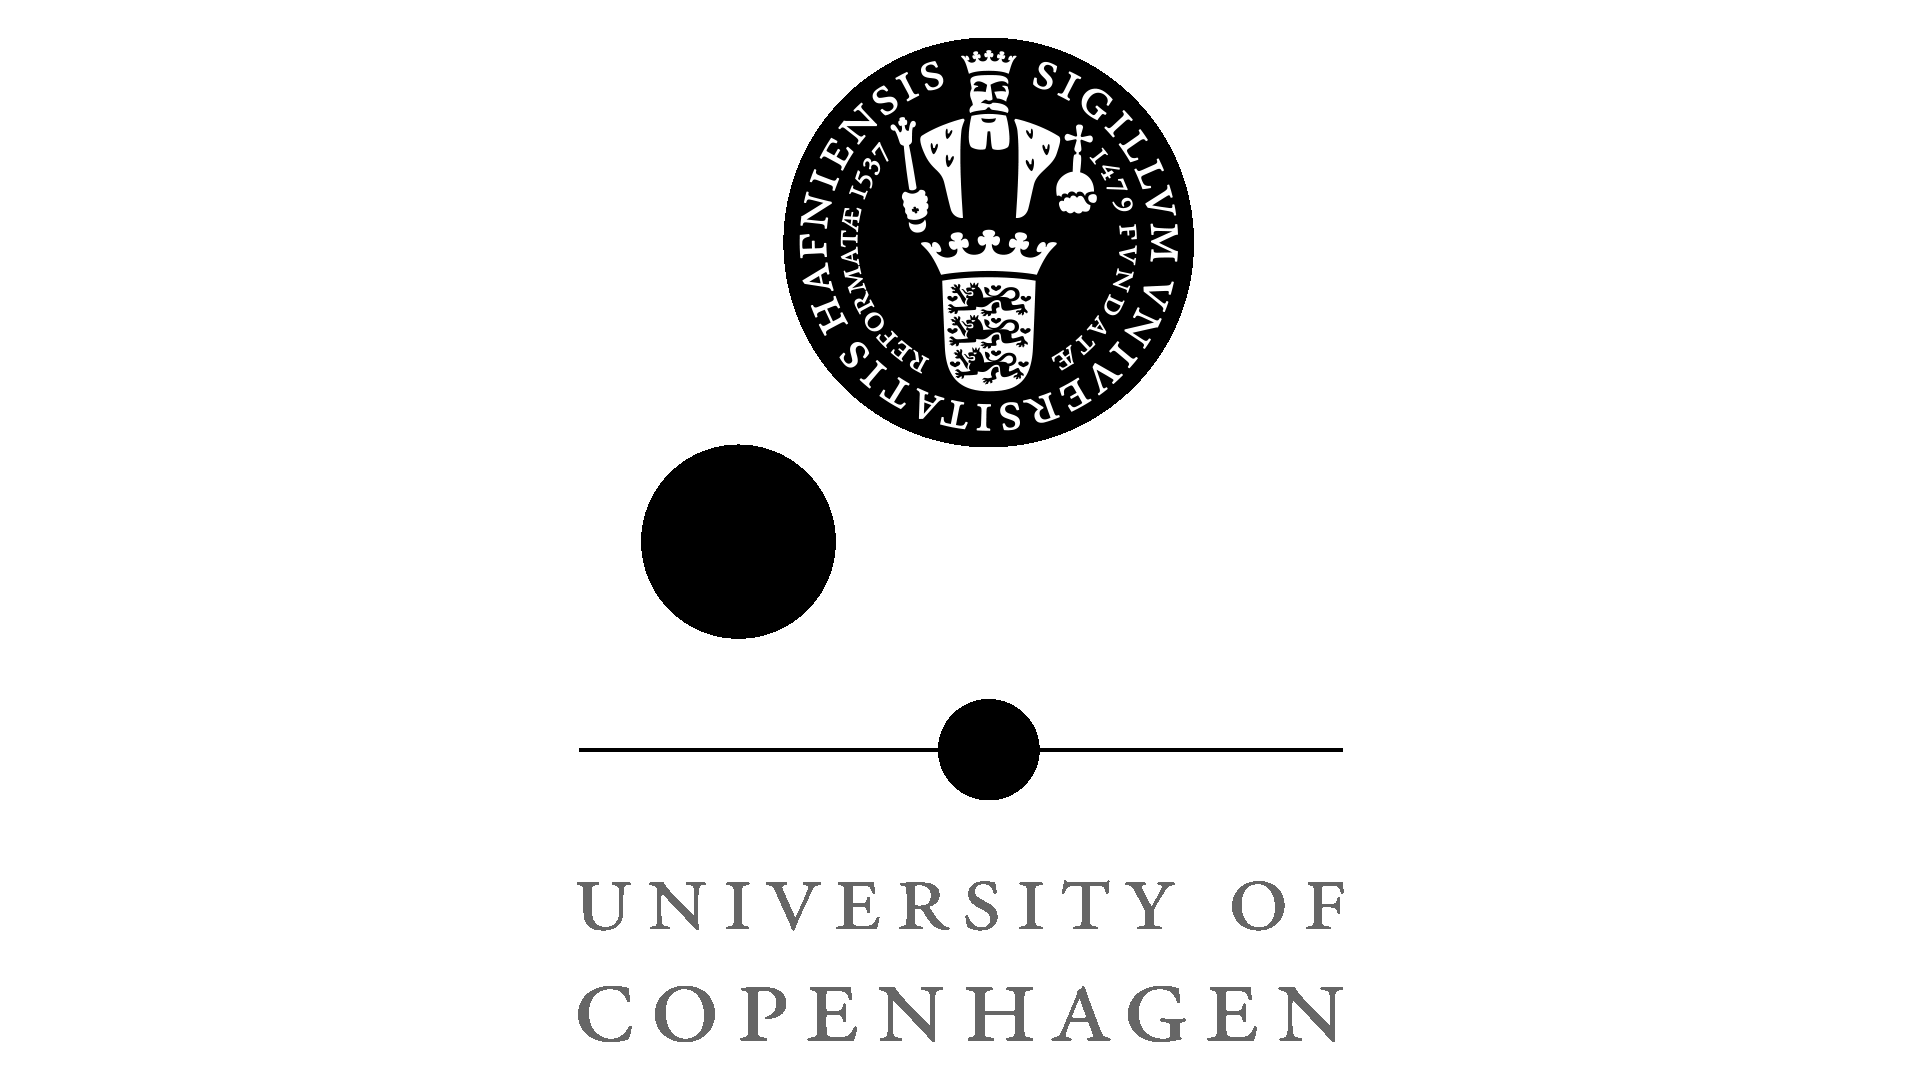 University of Copenhagen logo